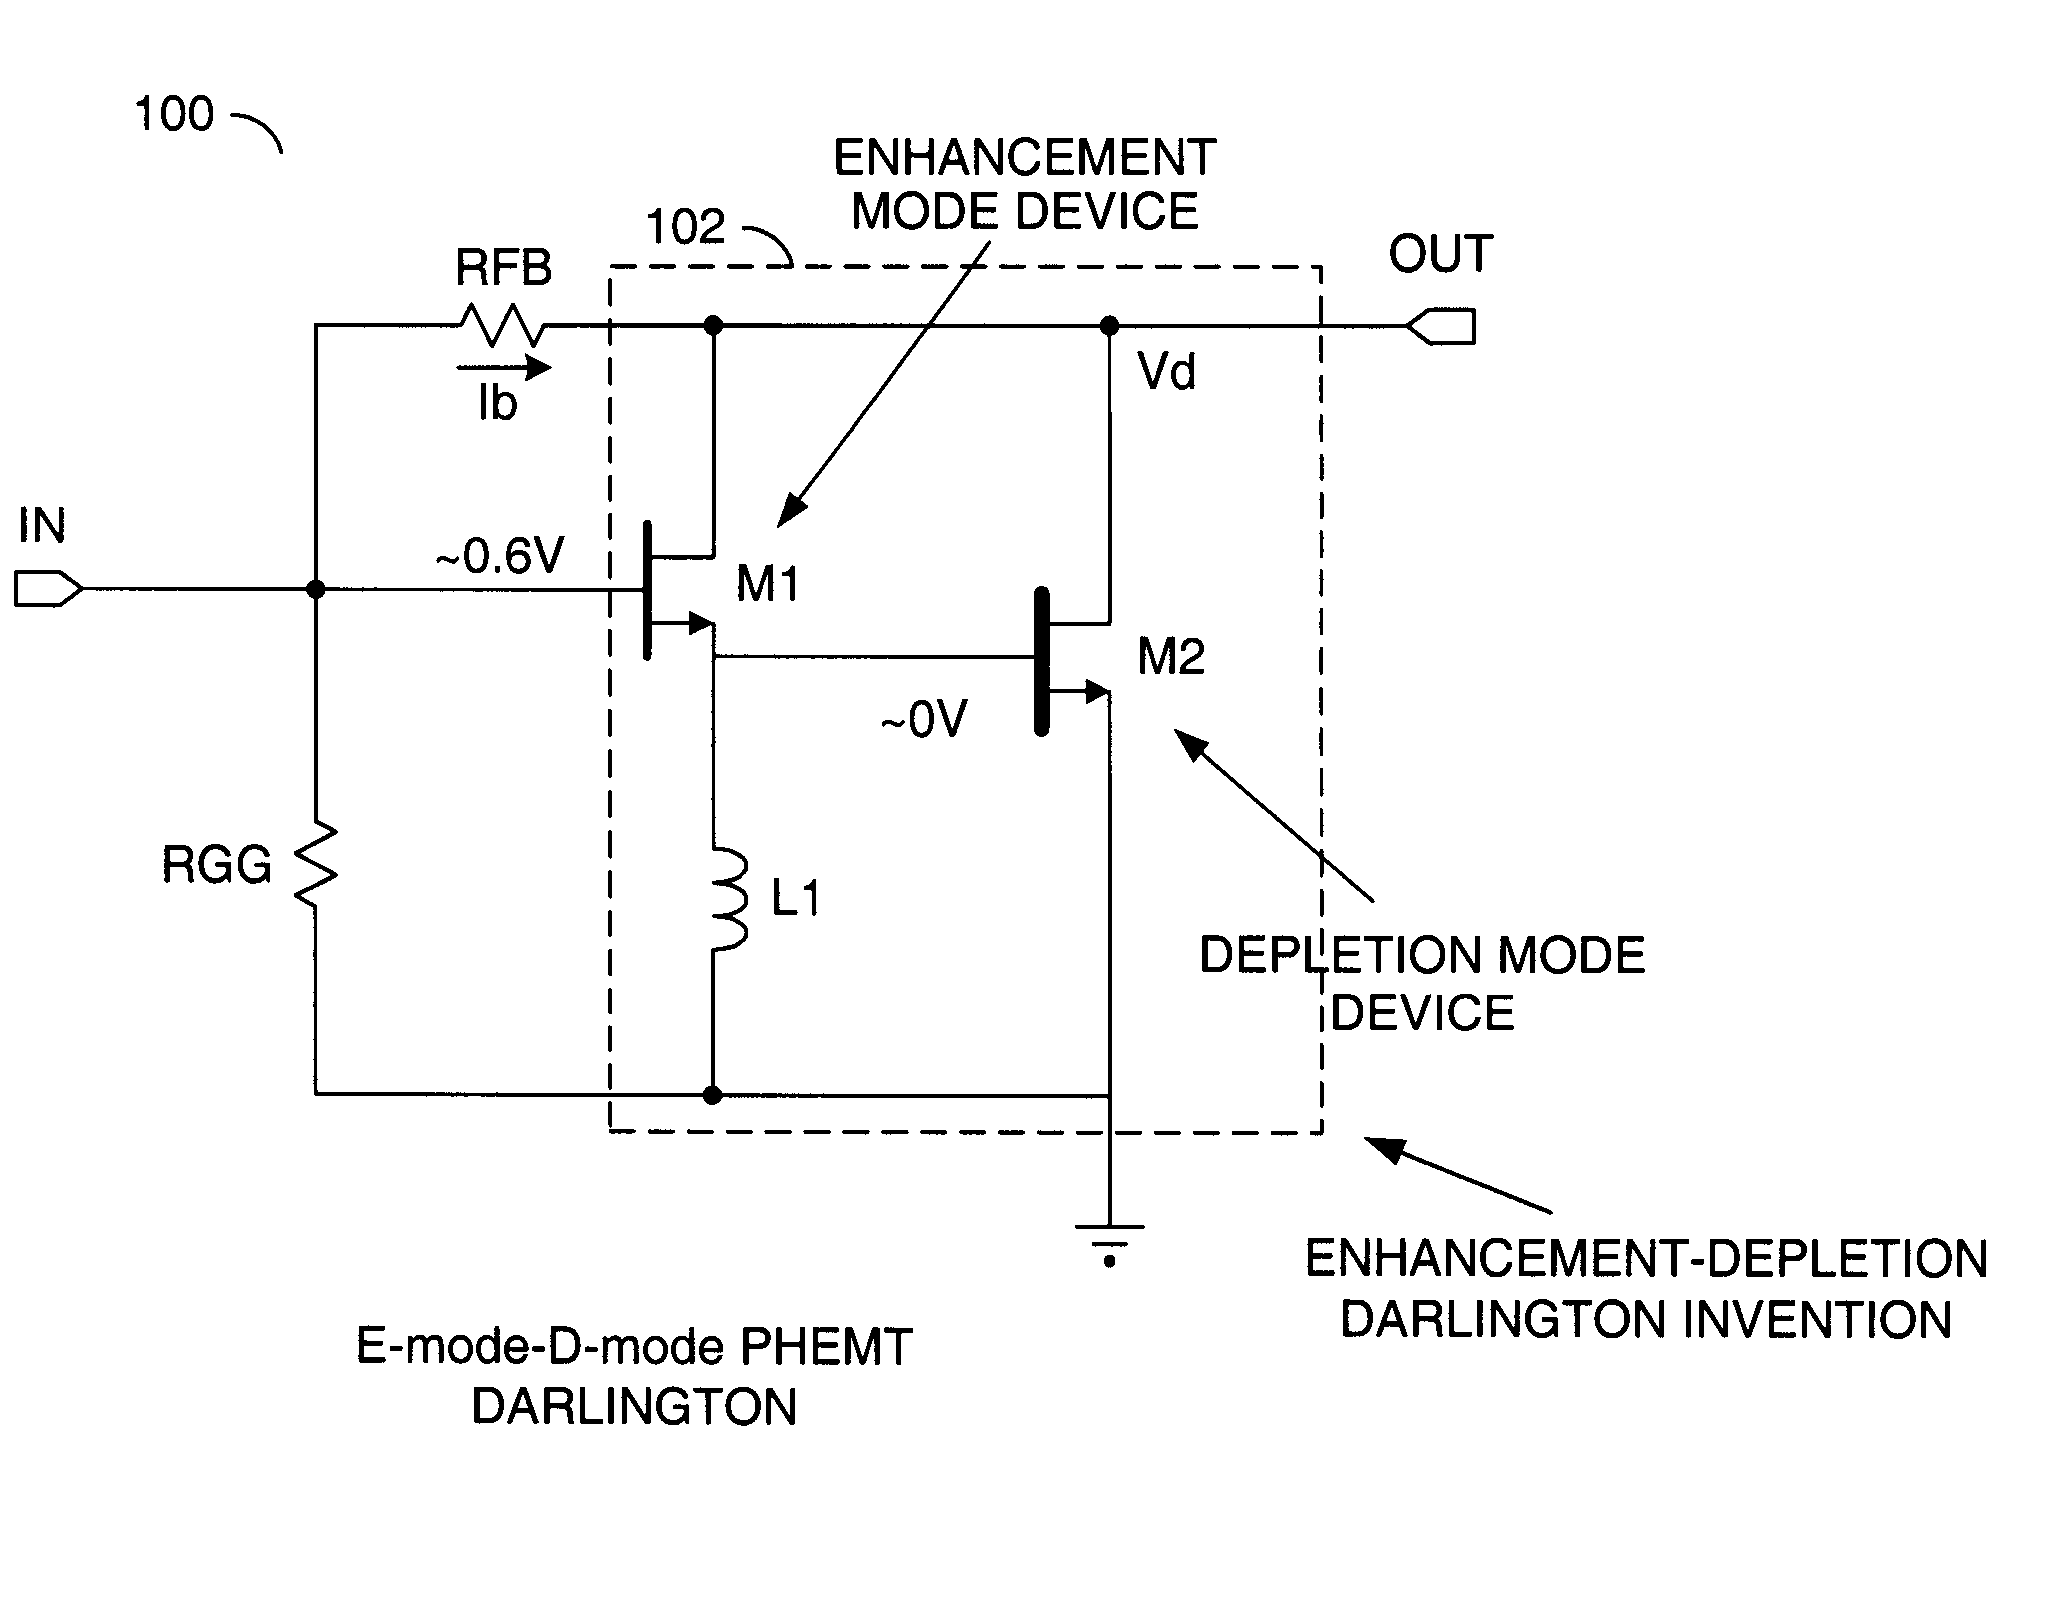 Enhancement-depletion Darlington device